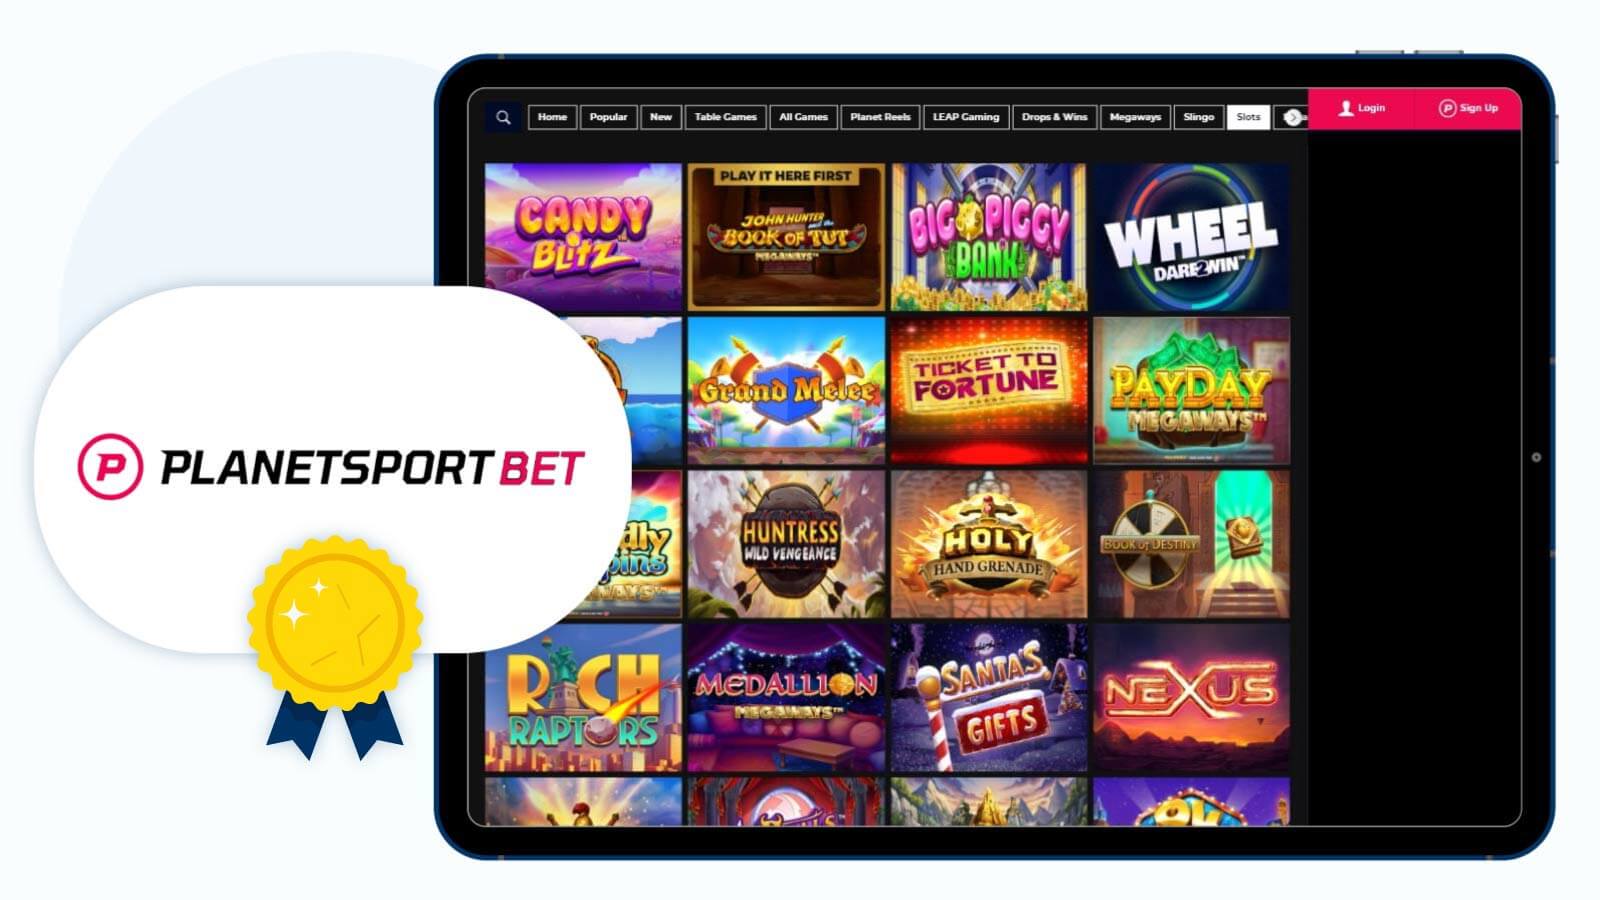 Planet-Sport-Bet-Casino-best-site-for-new-slots-bonuses